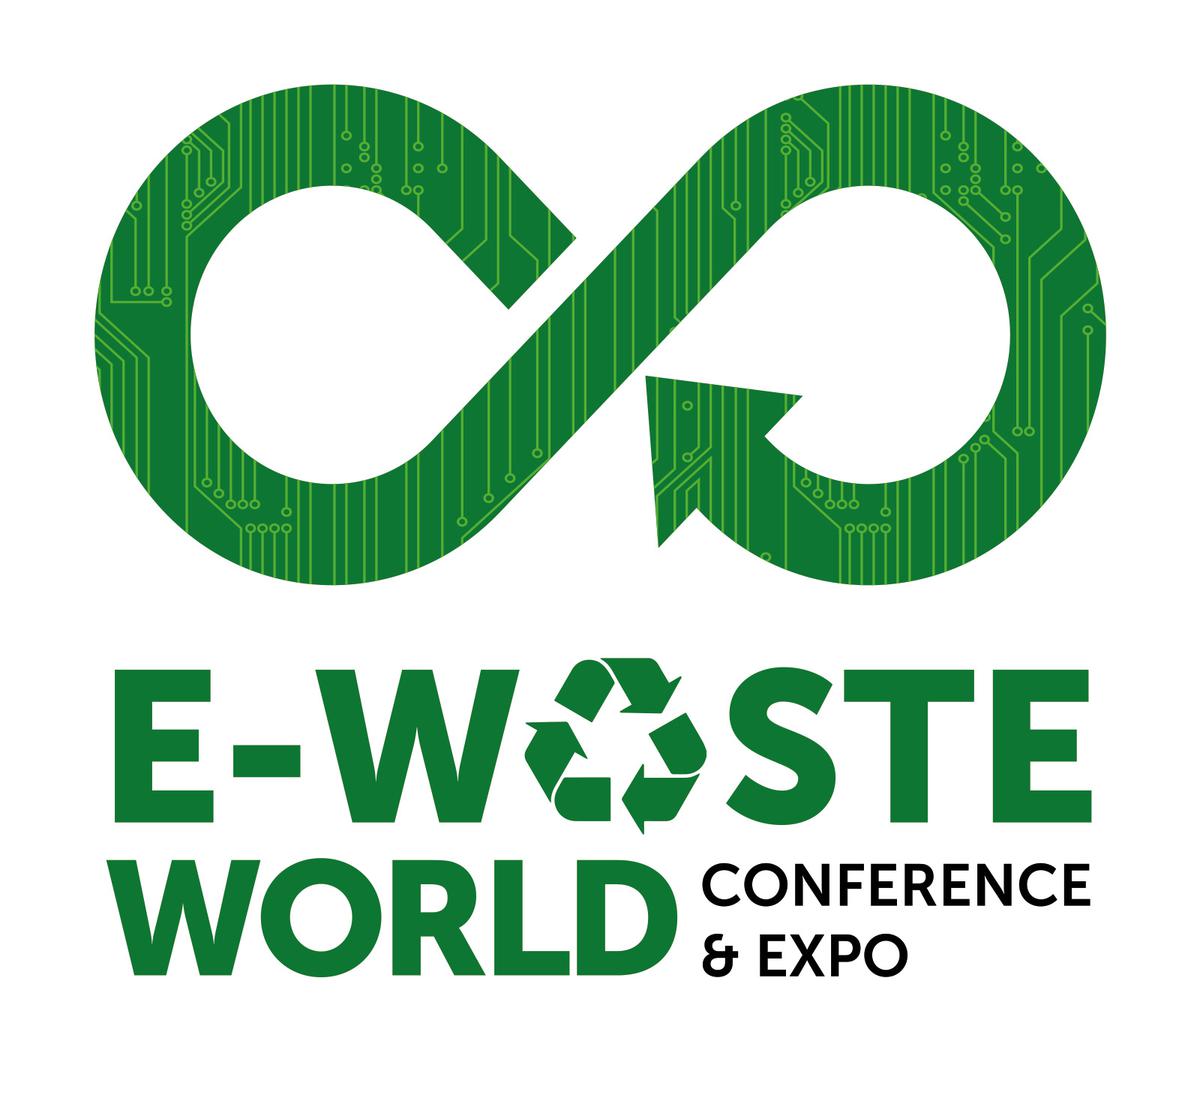 ewaste-world-logo.jpg